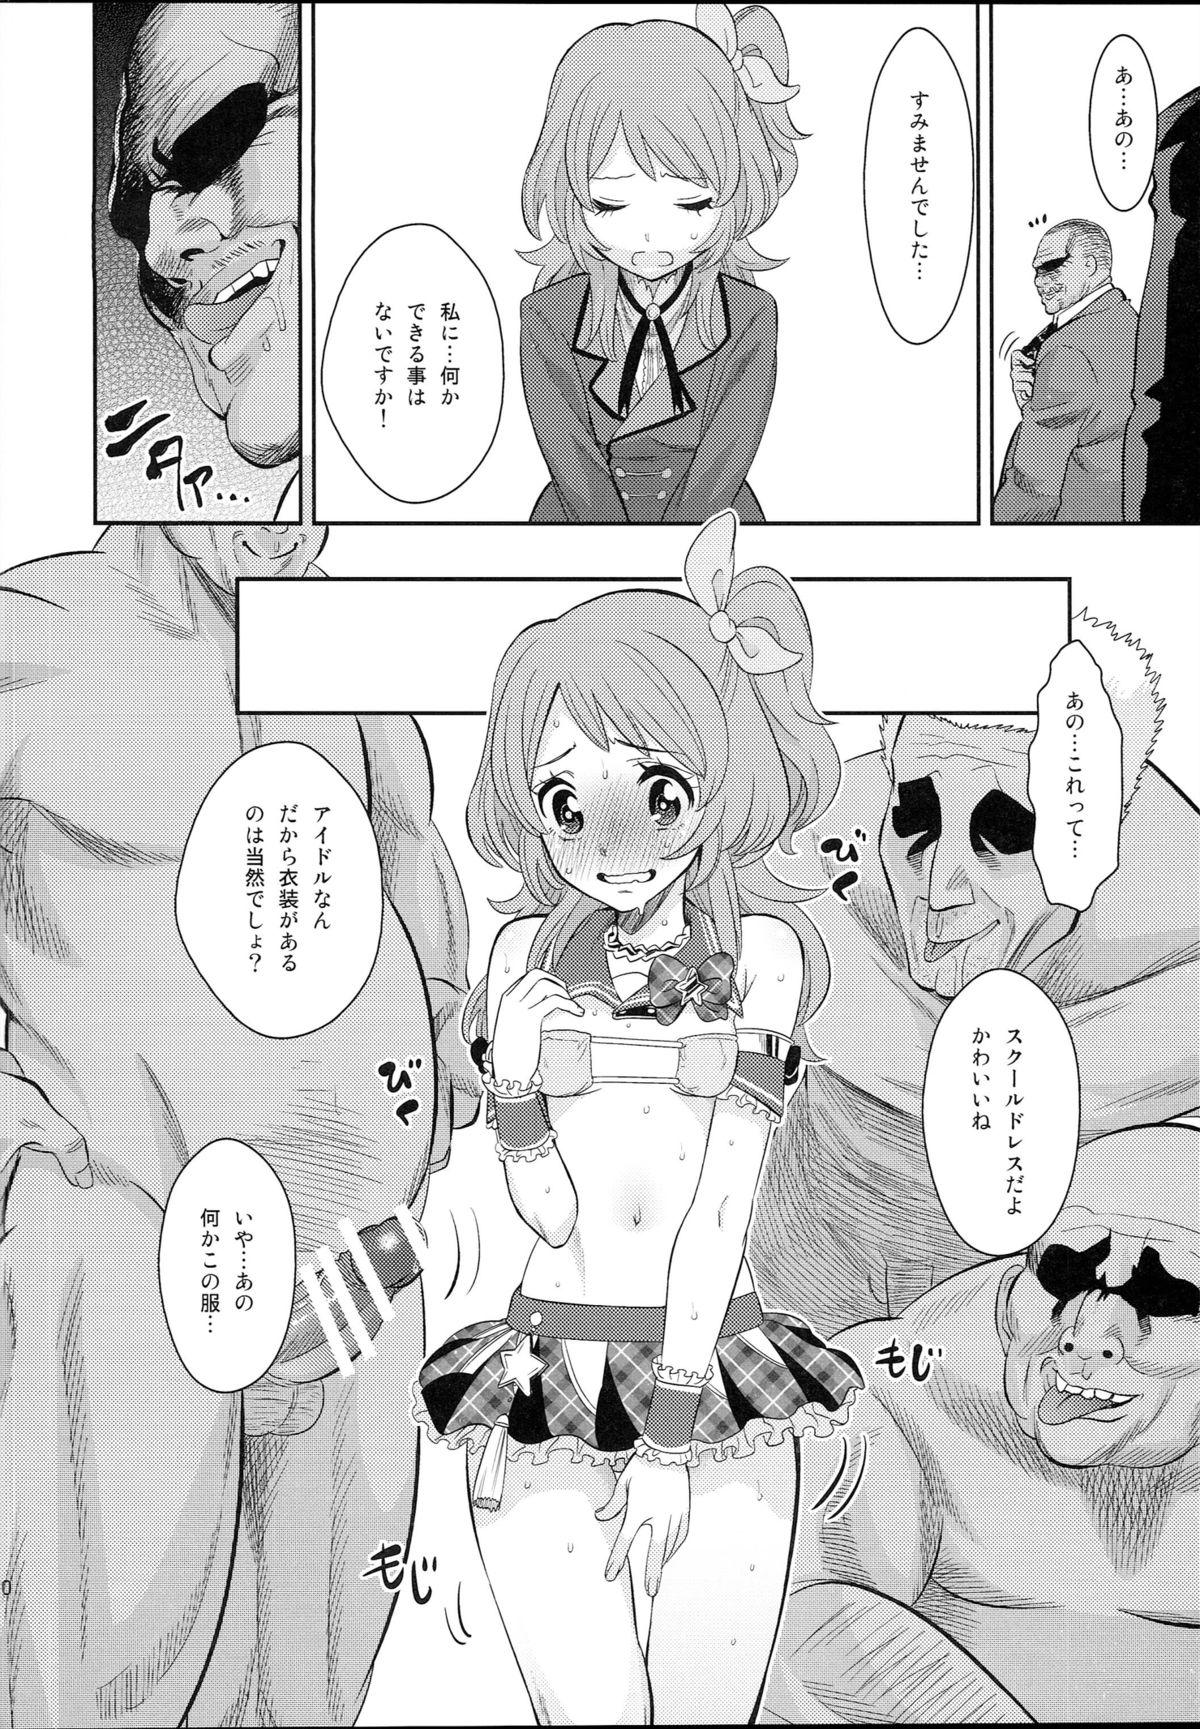 Exgirlfriend IT WAS A good EXPERiENCE - Aikatsu Gay Hunks - Page 10